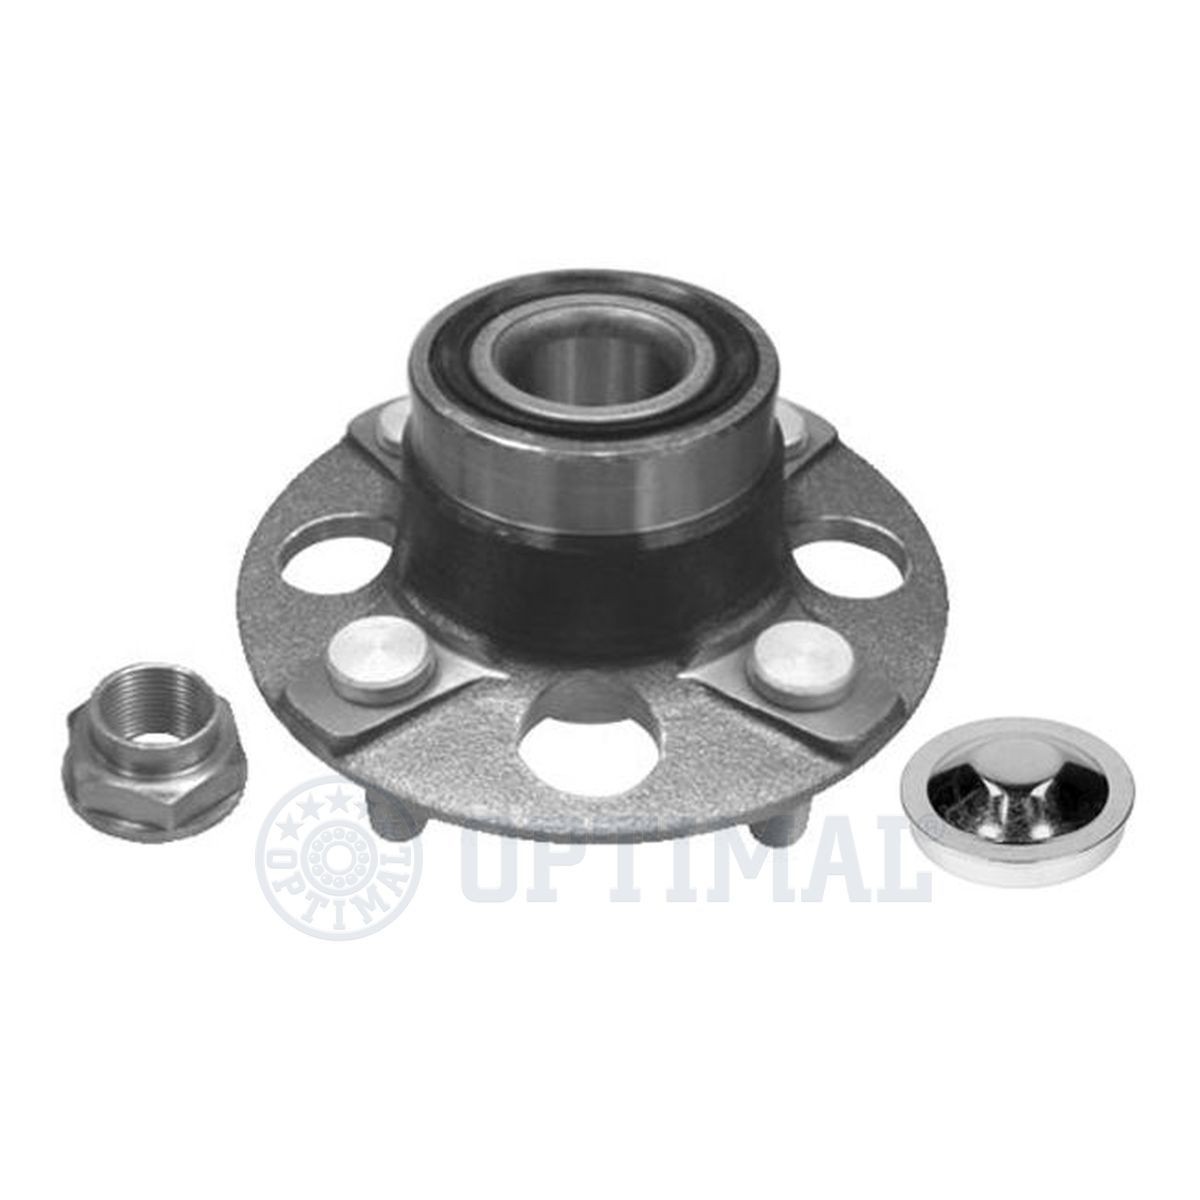 OPTIMAL 912530 Wheel bearing kit HONDA experience and price